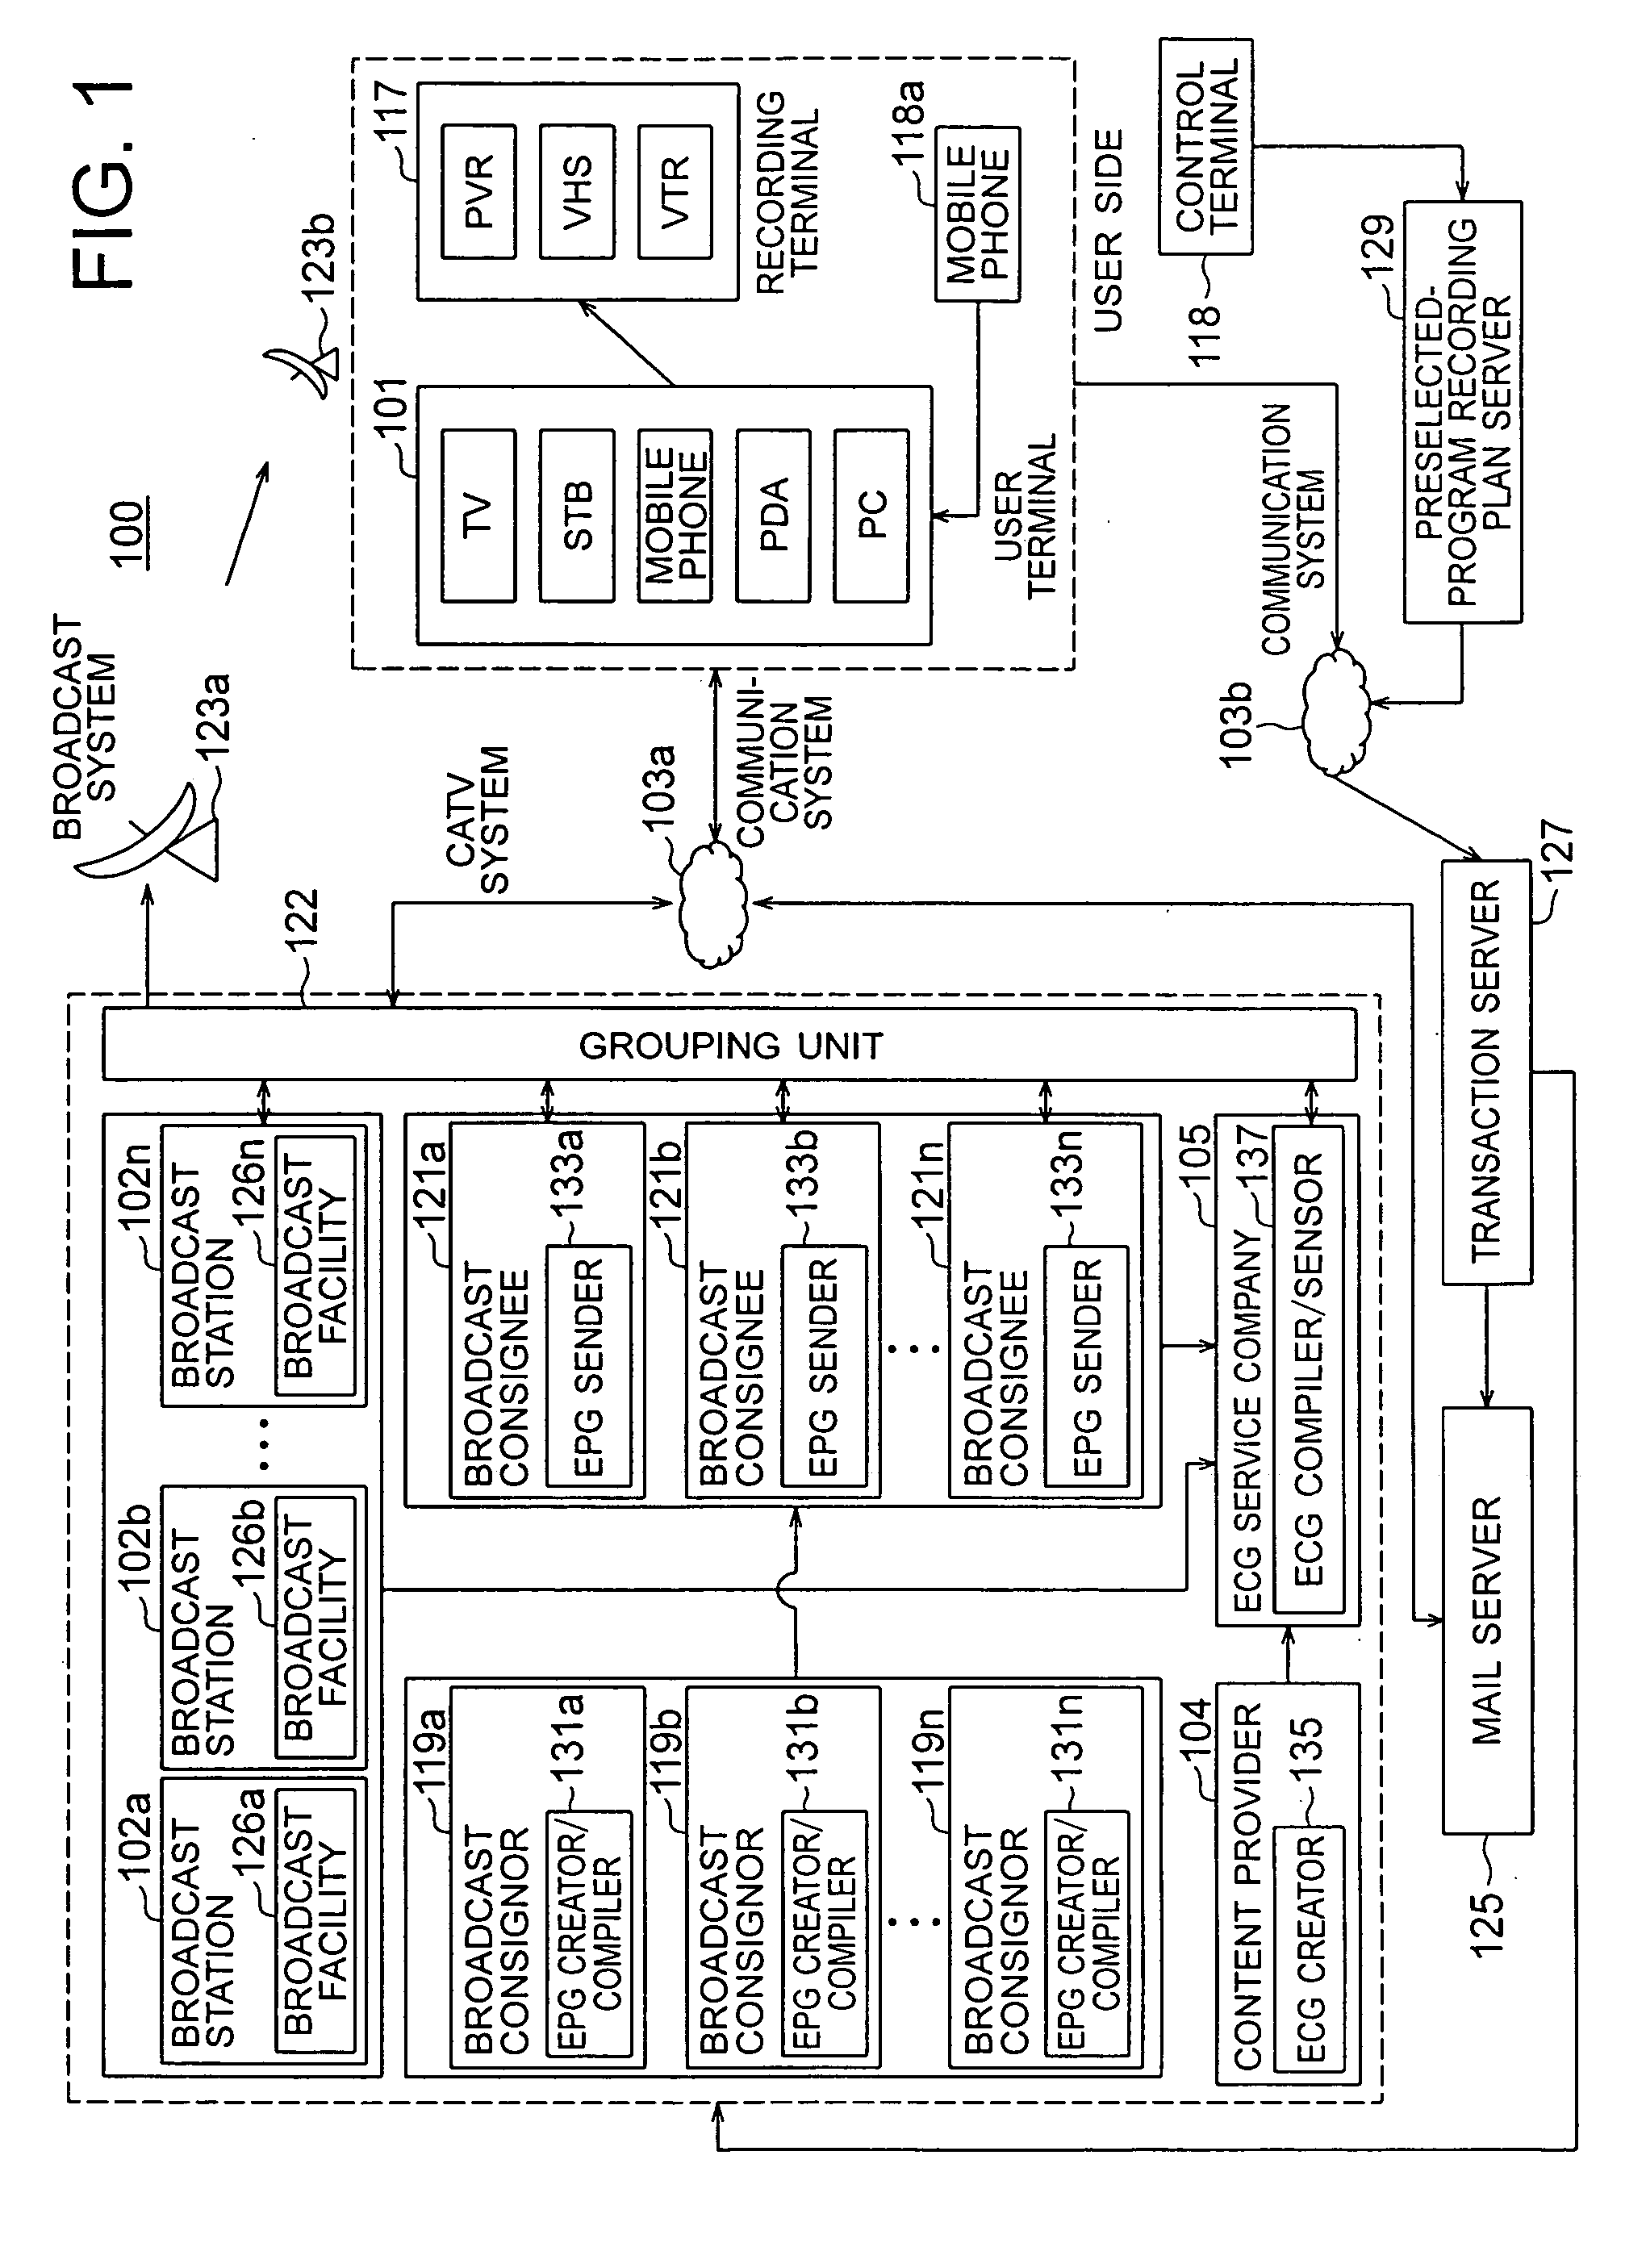 Program guide displaying method, apparatus and computer program